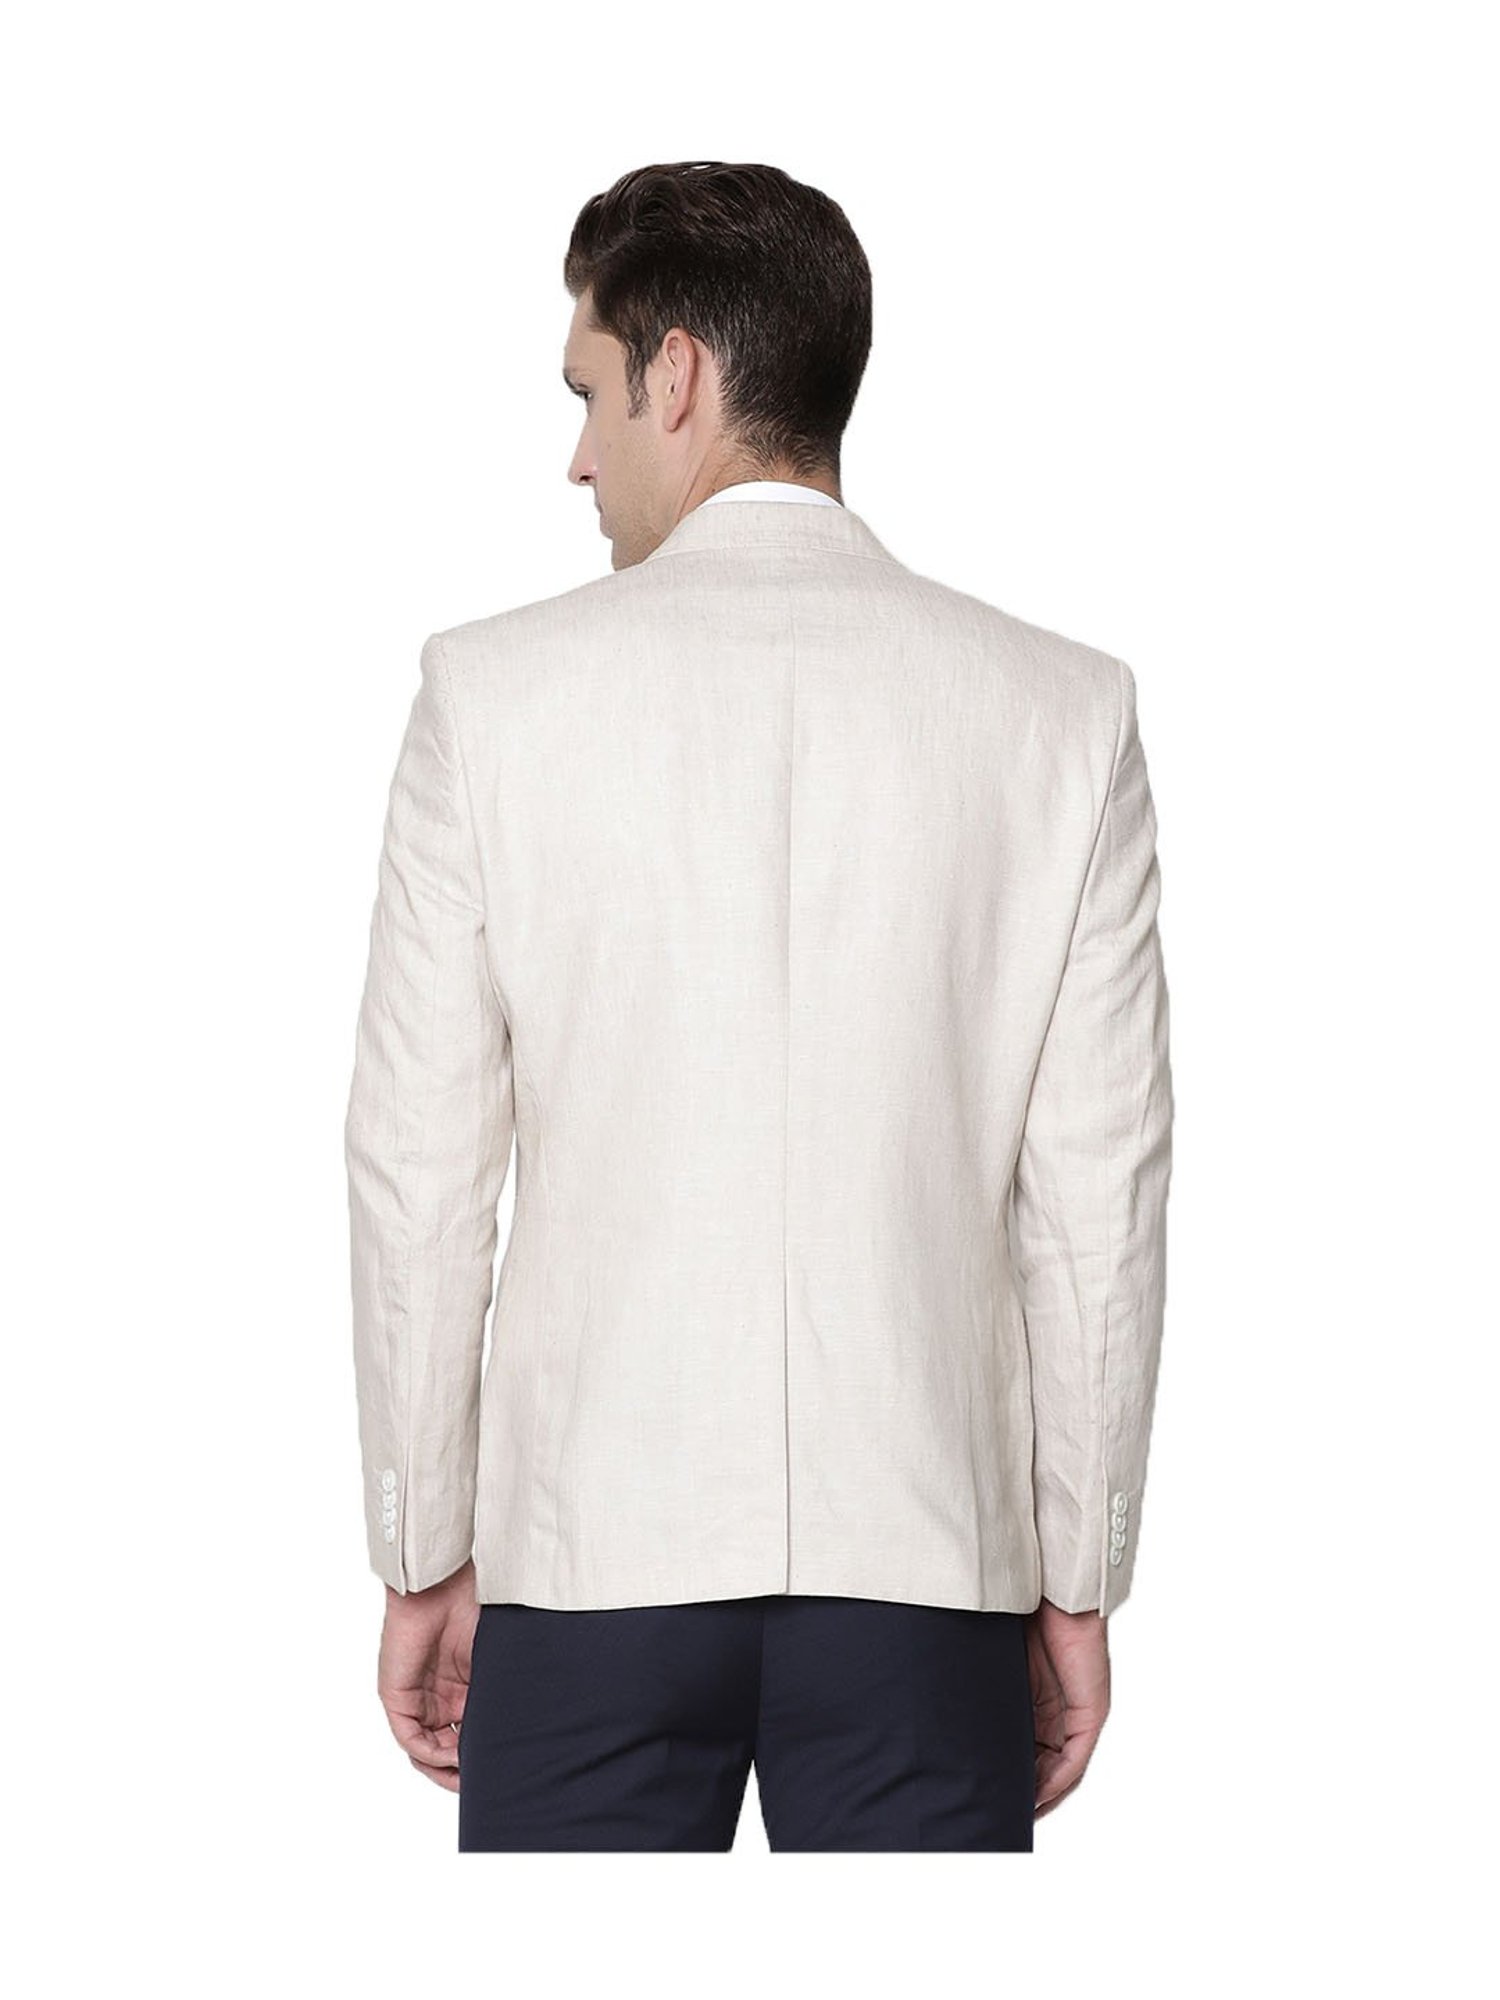 Men Clothing Linen Jackets - Buy Men Clothing Linen Jackets online in India